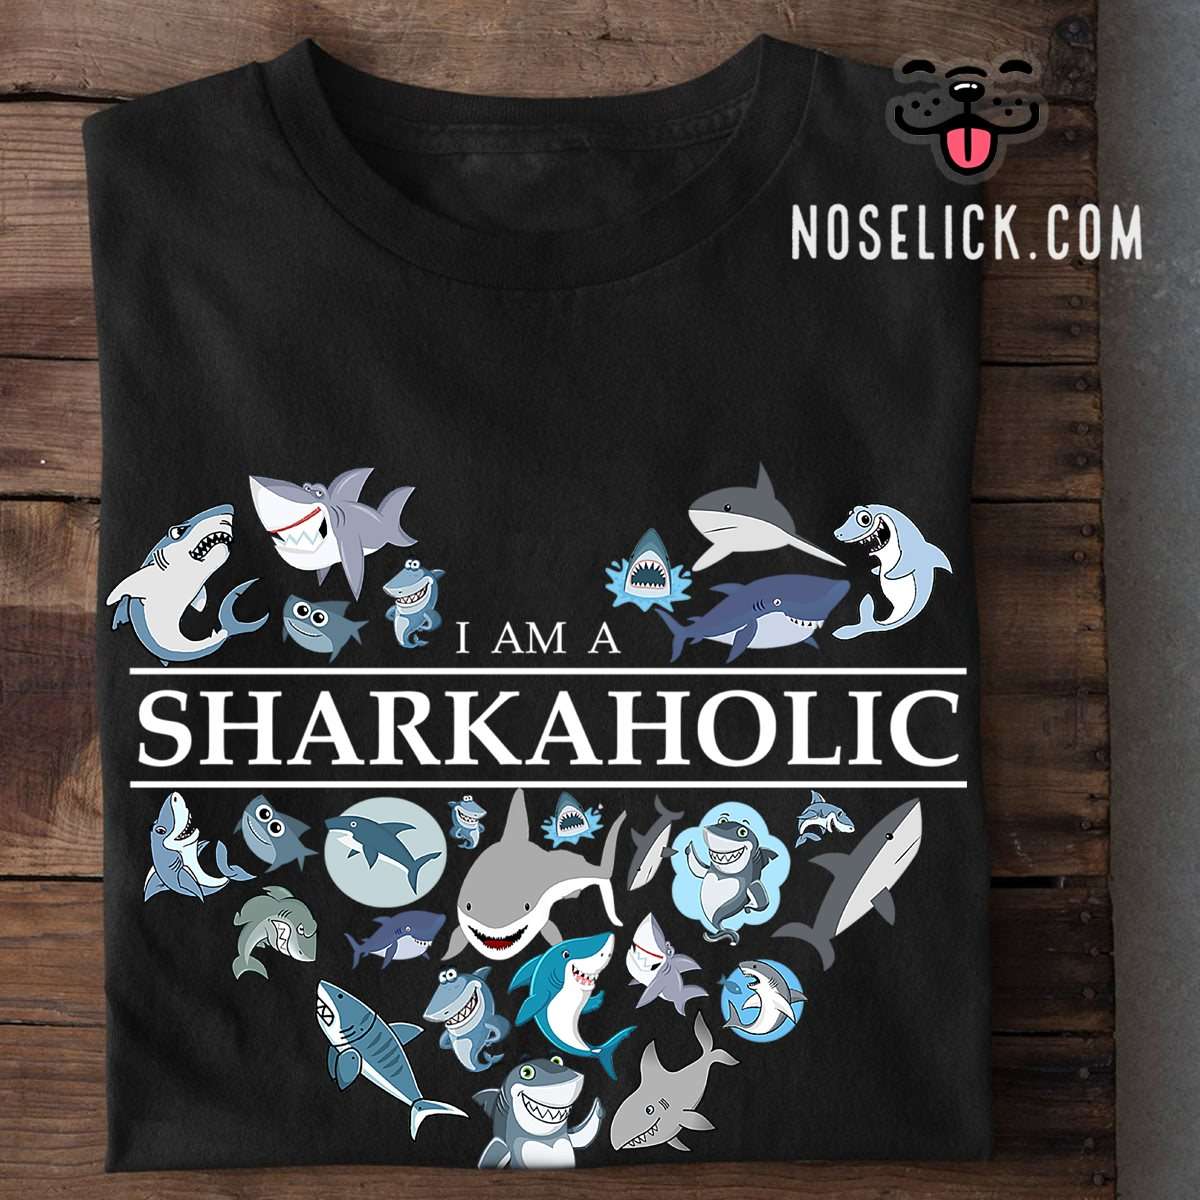 I am a Sharkaholic - Family of shark, shark lover